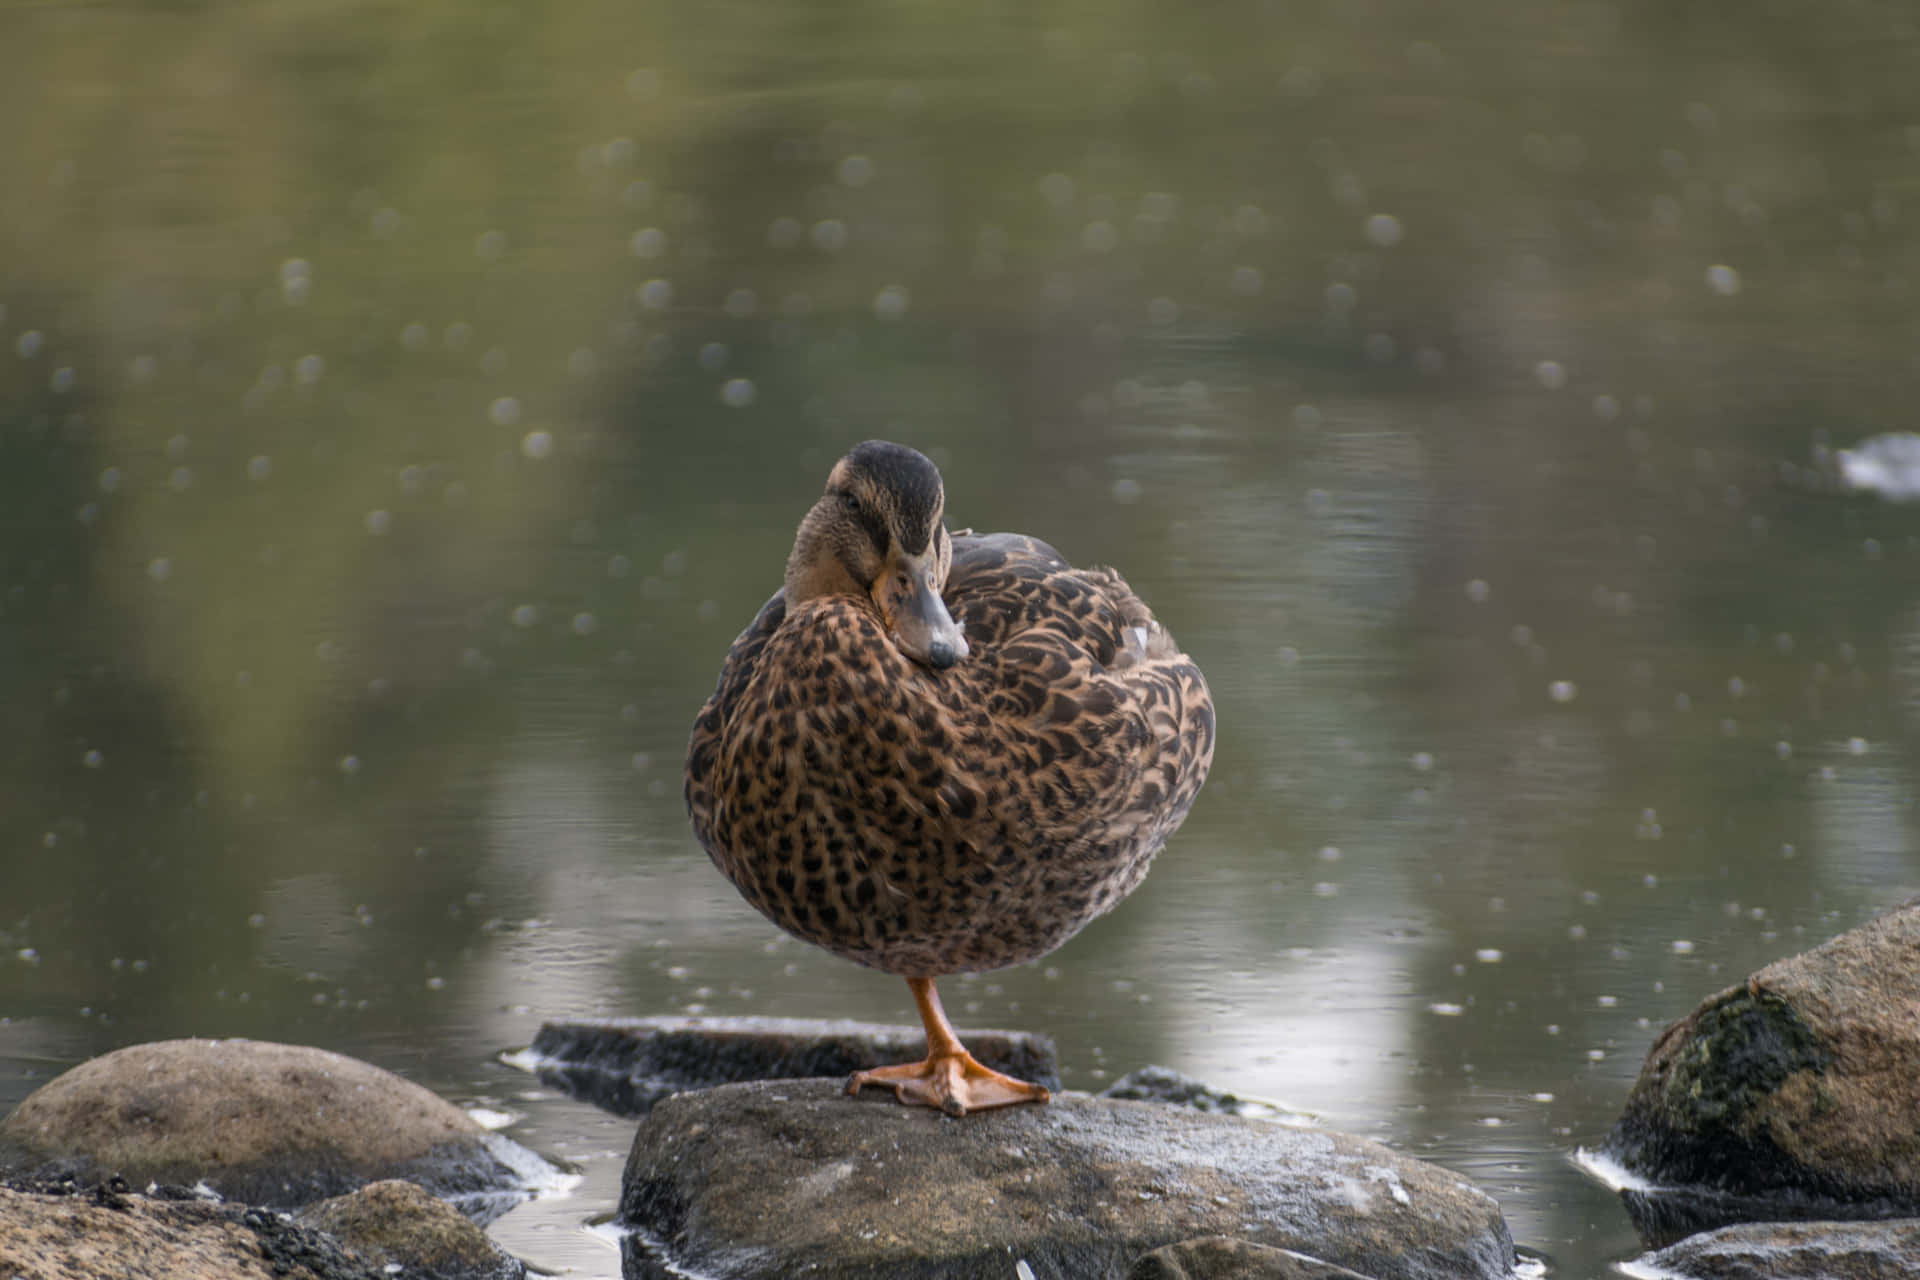 Quack Quack! A Duck Splashing in a Pond